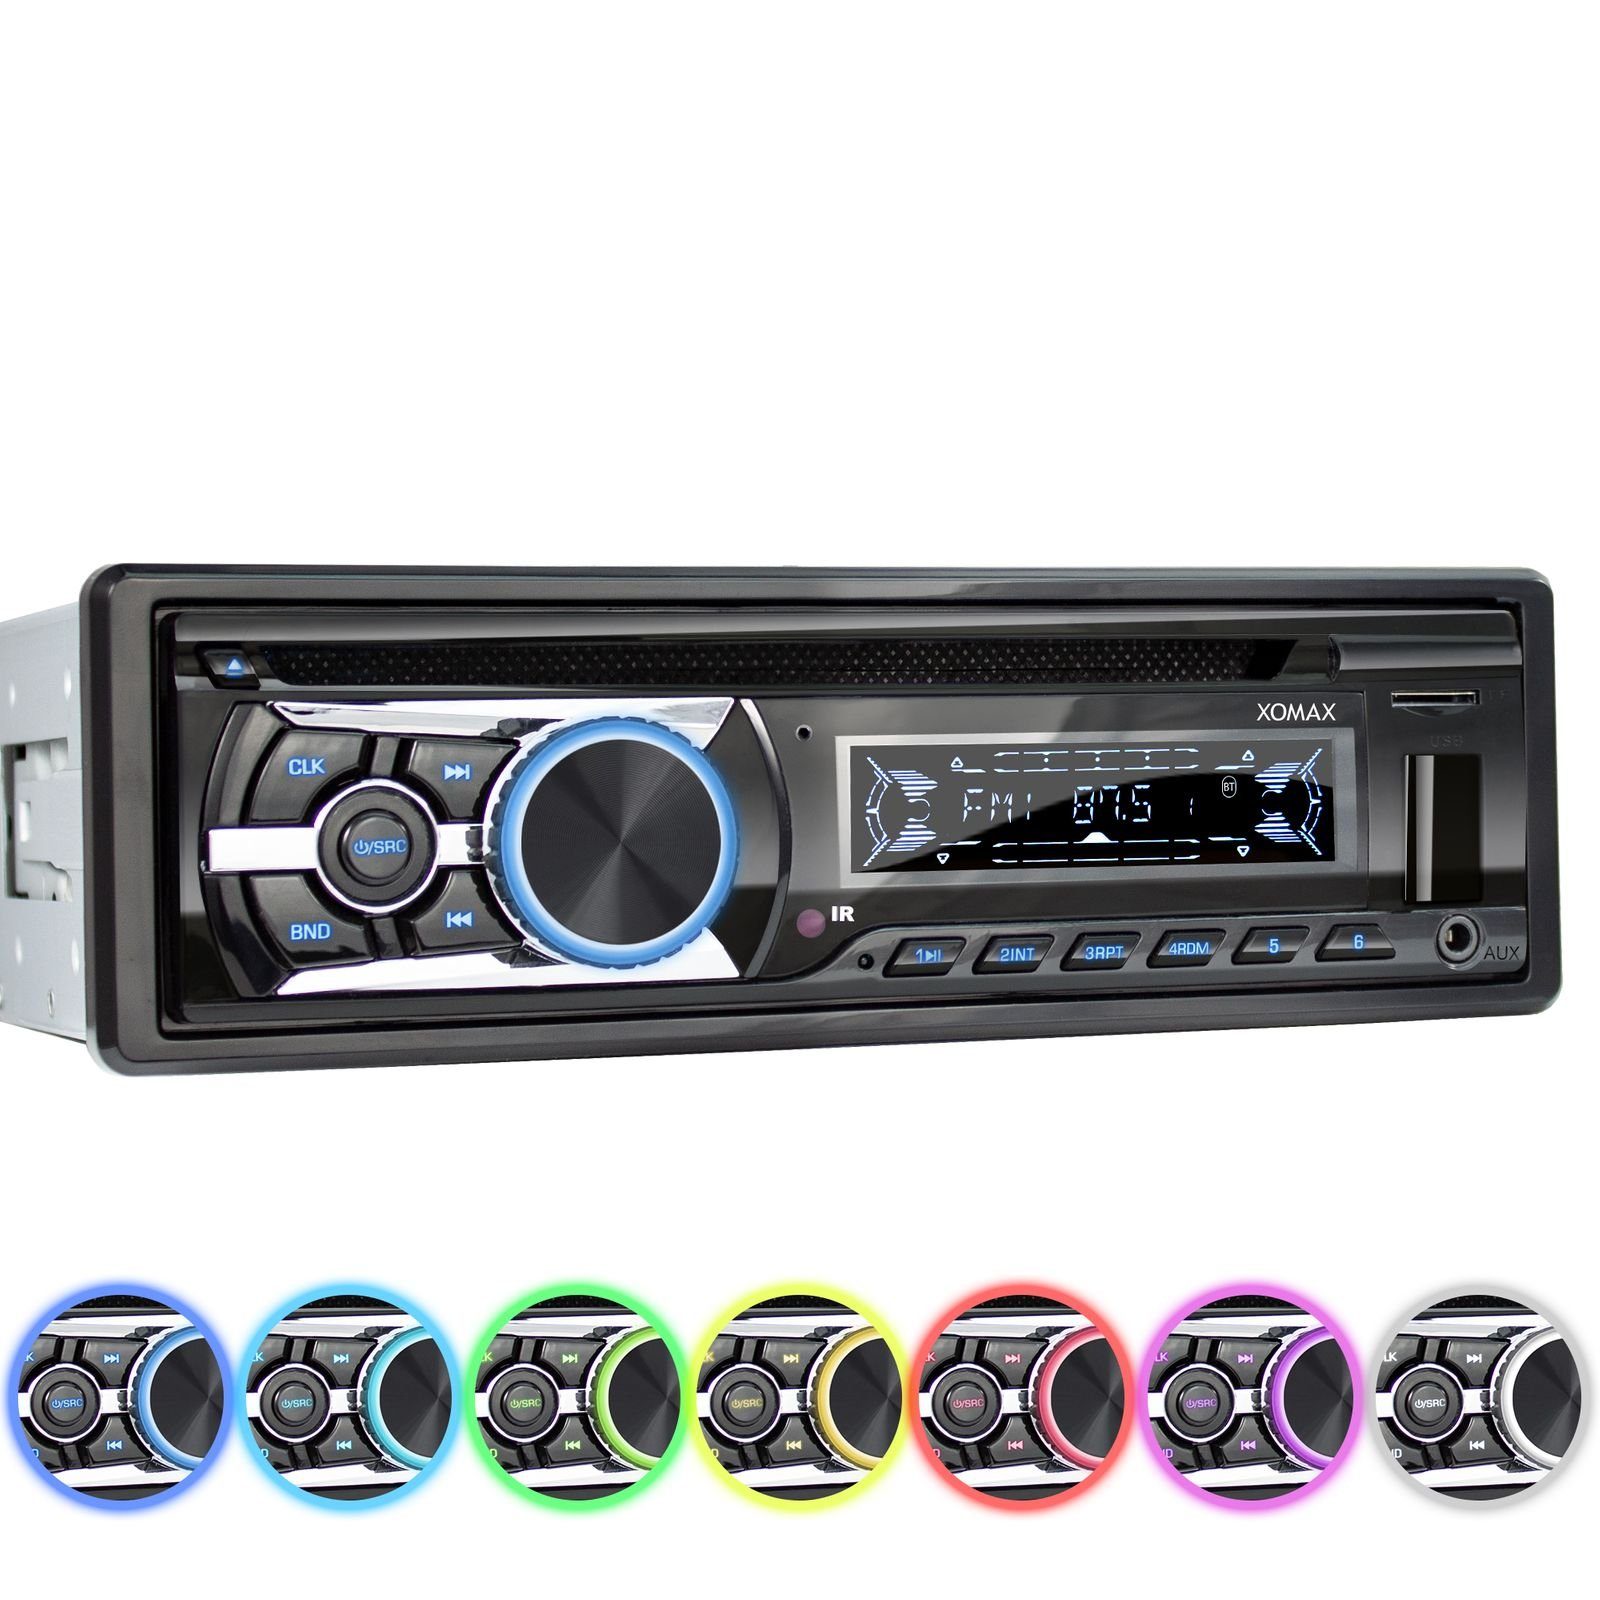 XOMAX XM-CDB623 Autoradio mit CD Player, Bluetooth, USB, SD, AUX